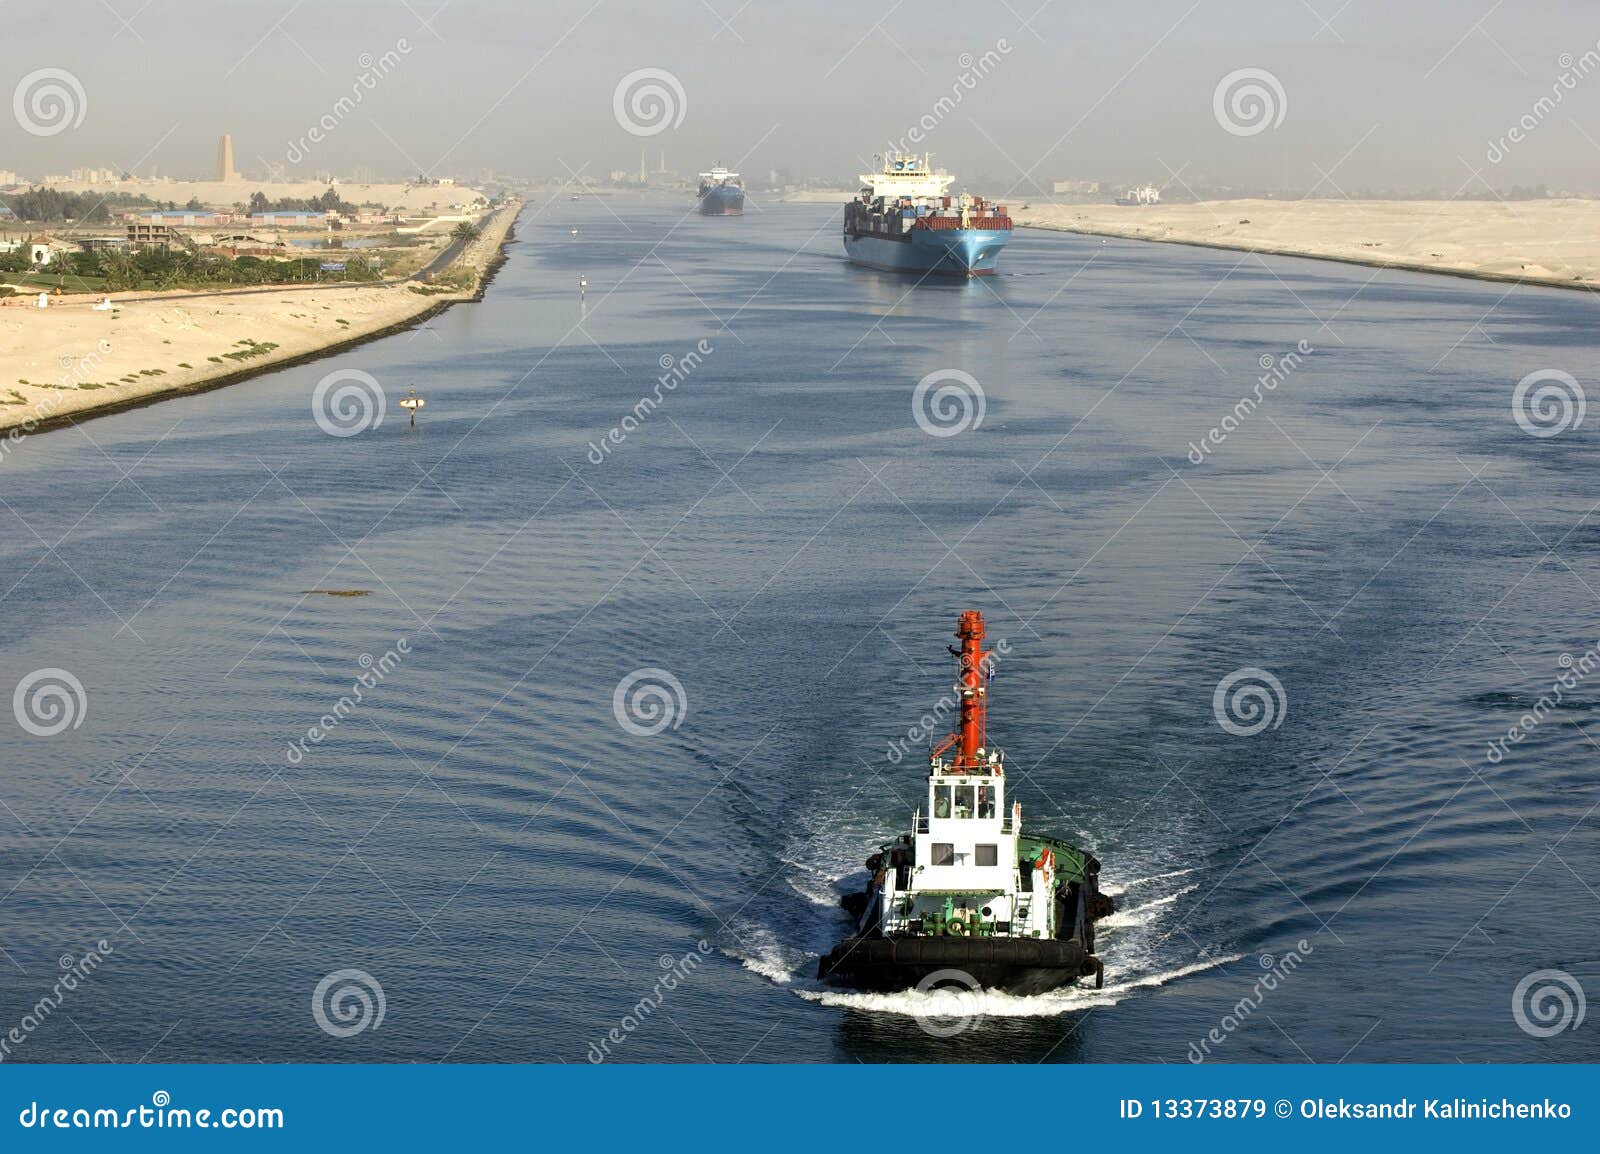 ship passing through the suez canal